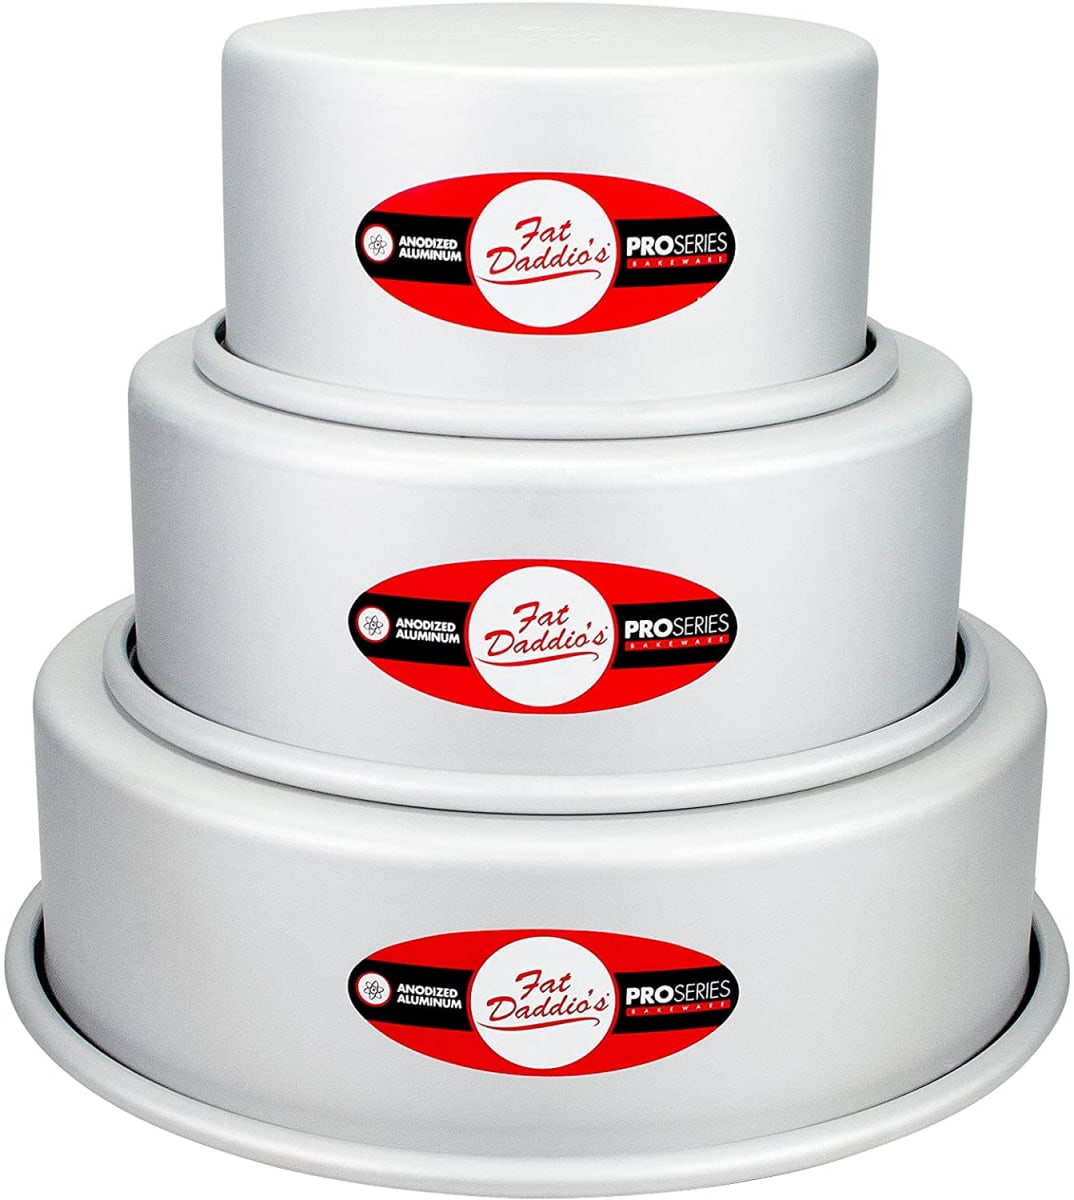 Anodized Aluminum 3-Tiered Round Cake Pan Set